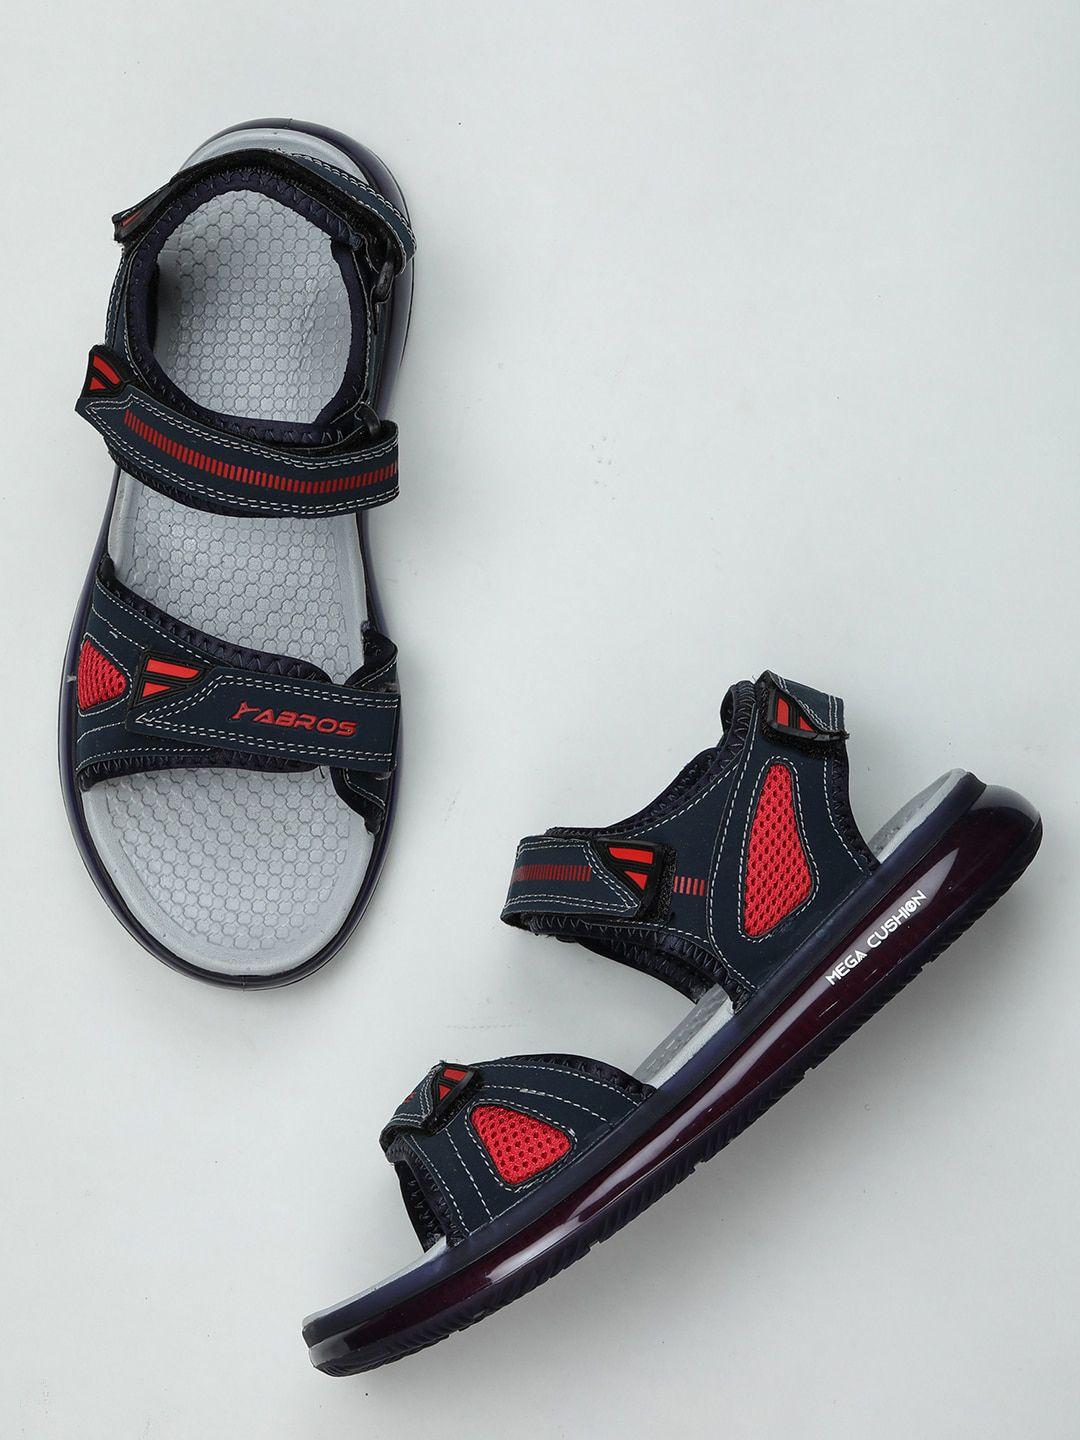 ABROS Men Black & Red Sports Sandals